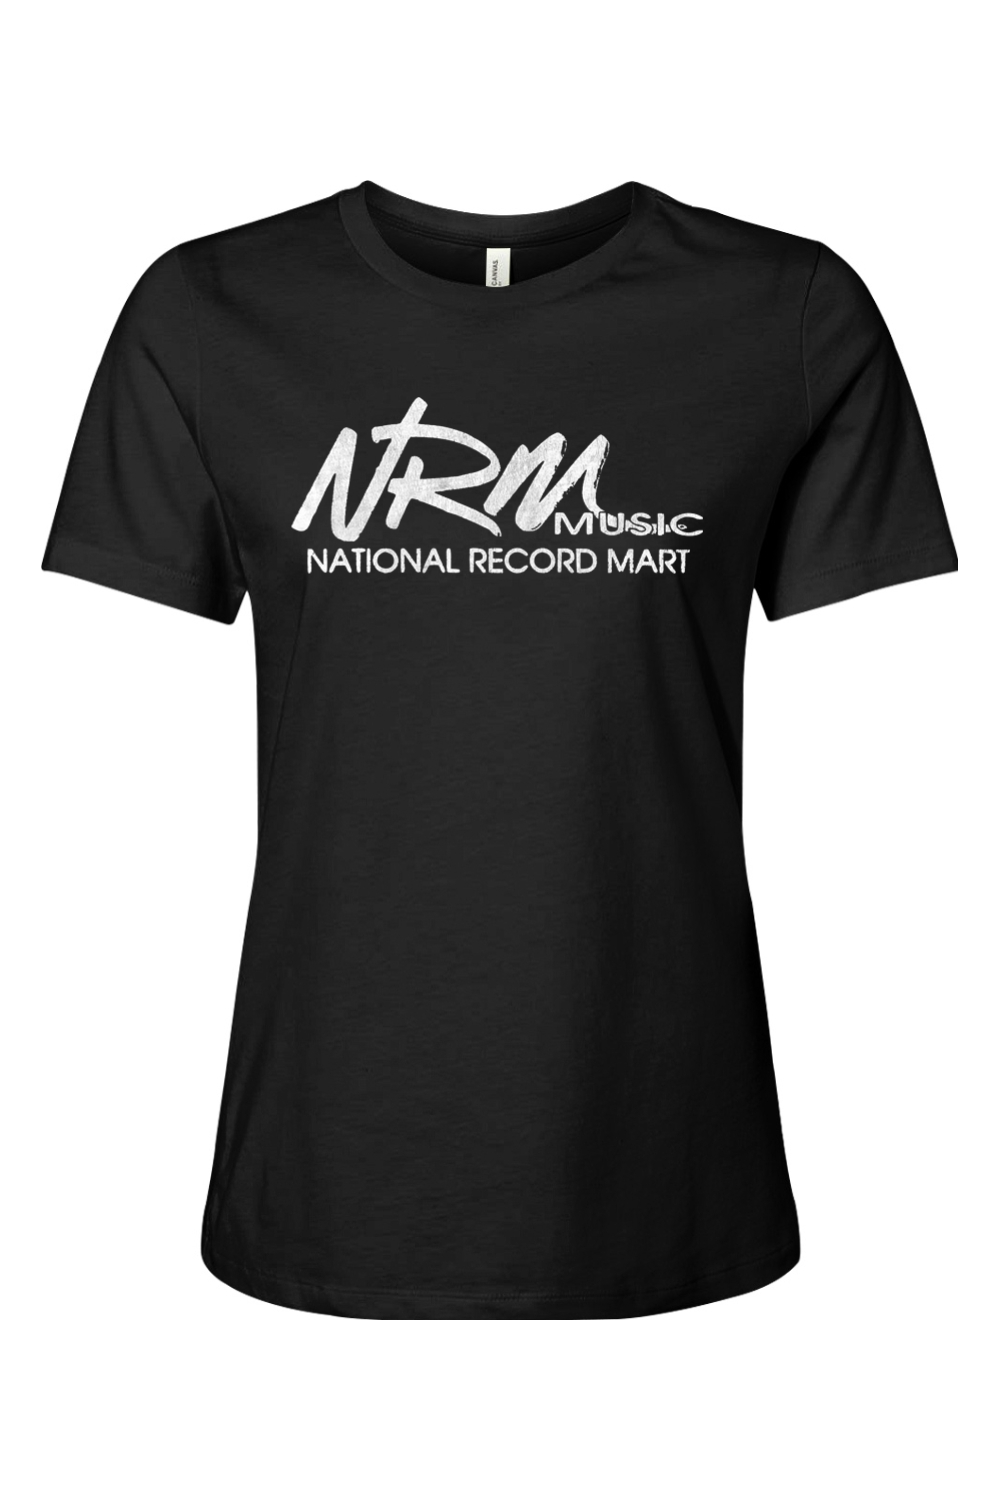 NRM - National Record Mart - Ladies Tee - Yinzylvania